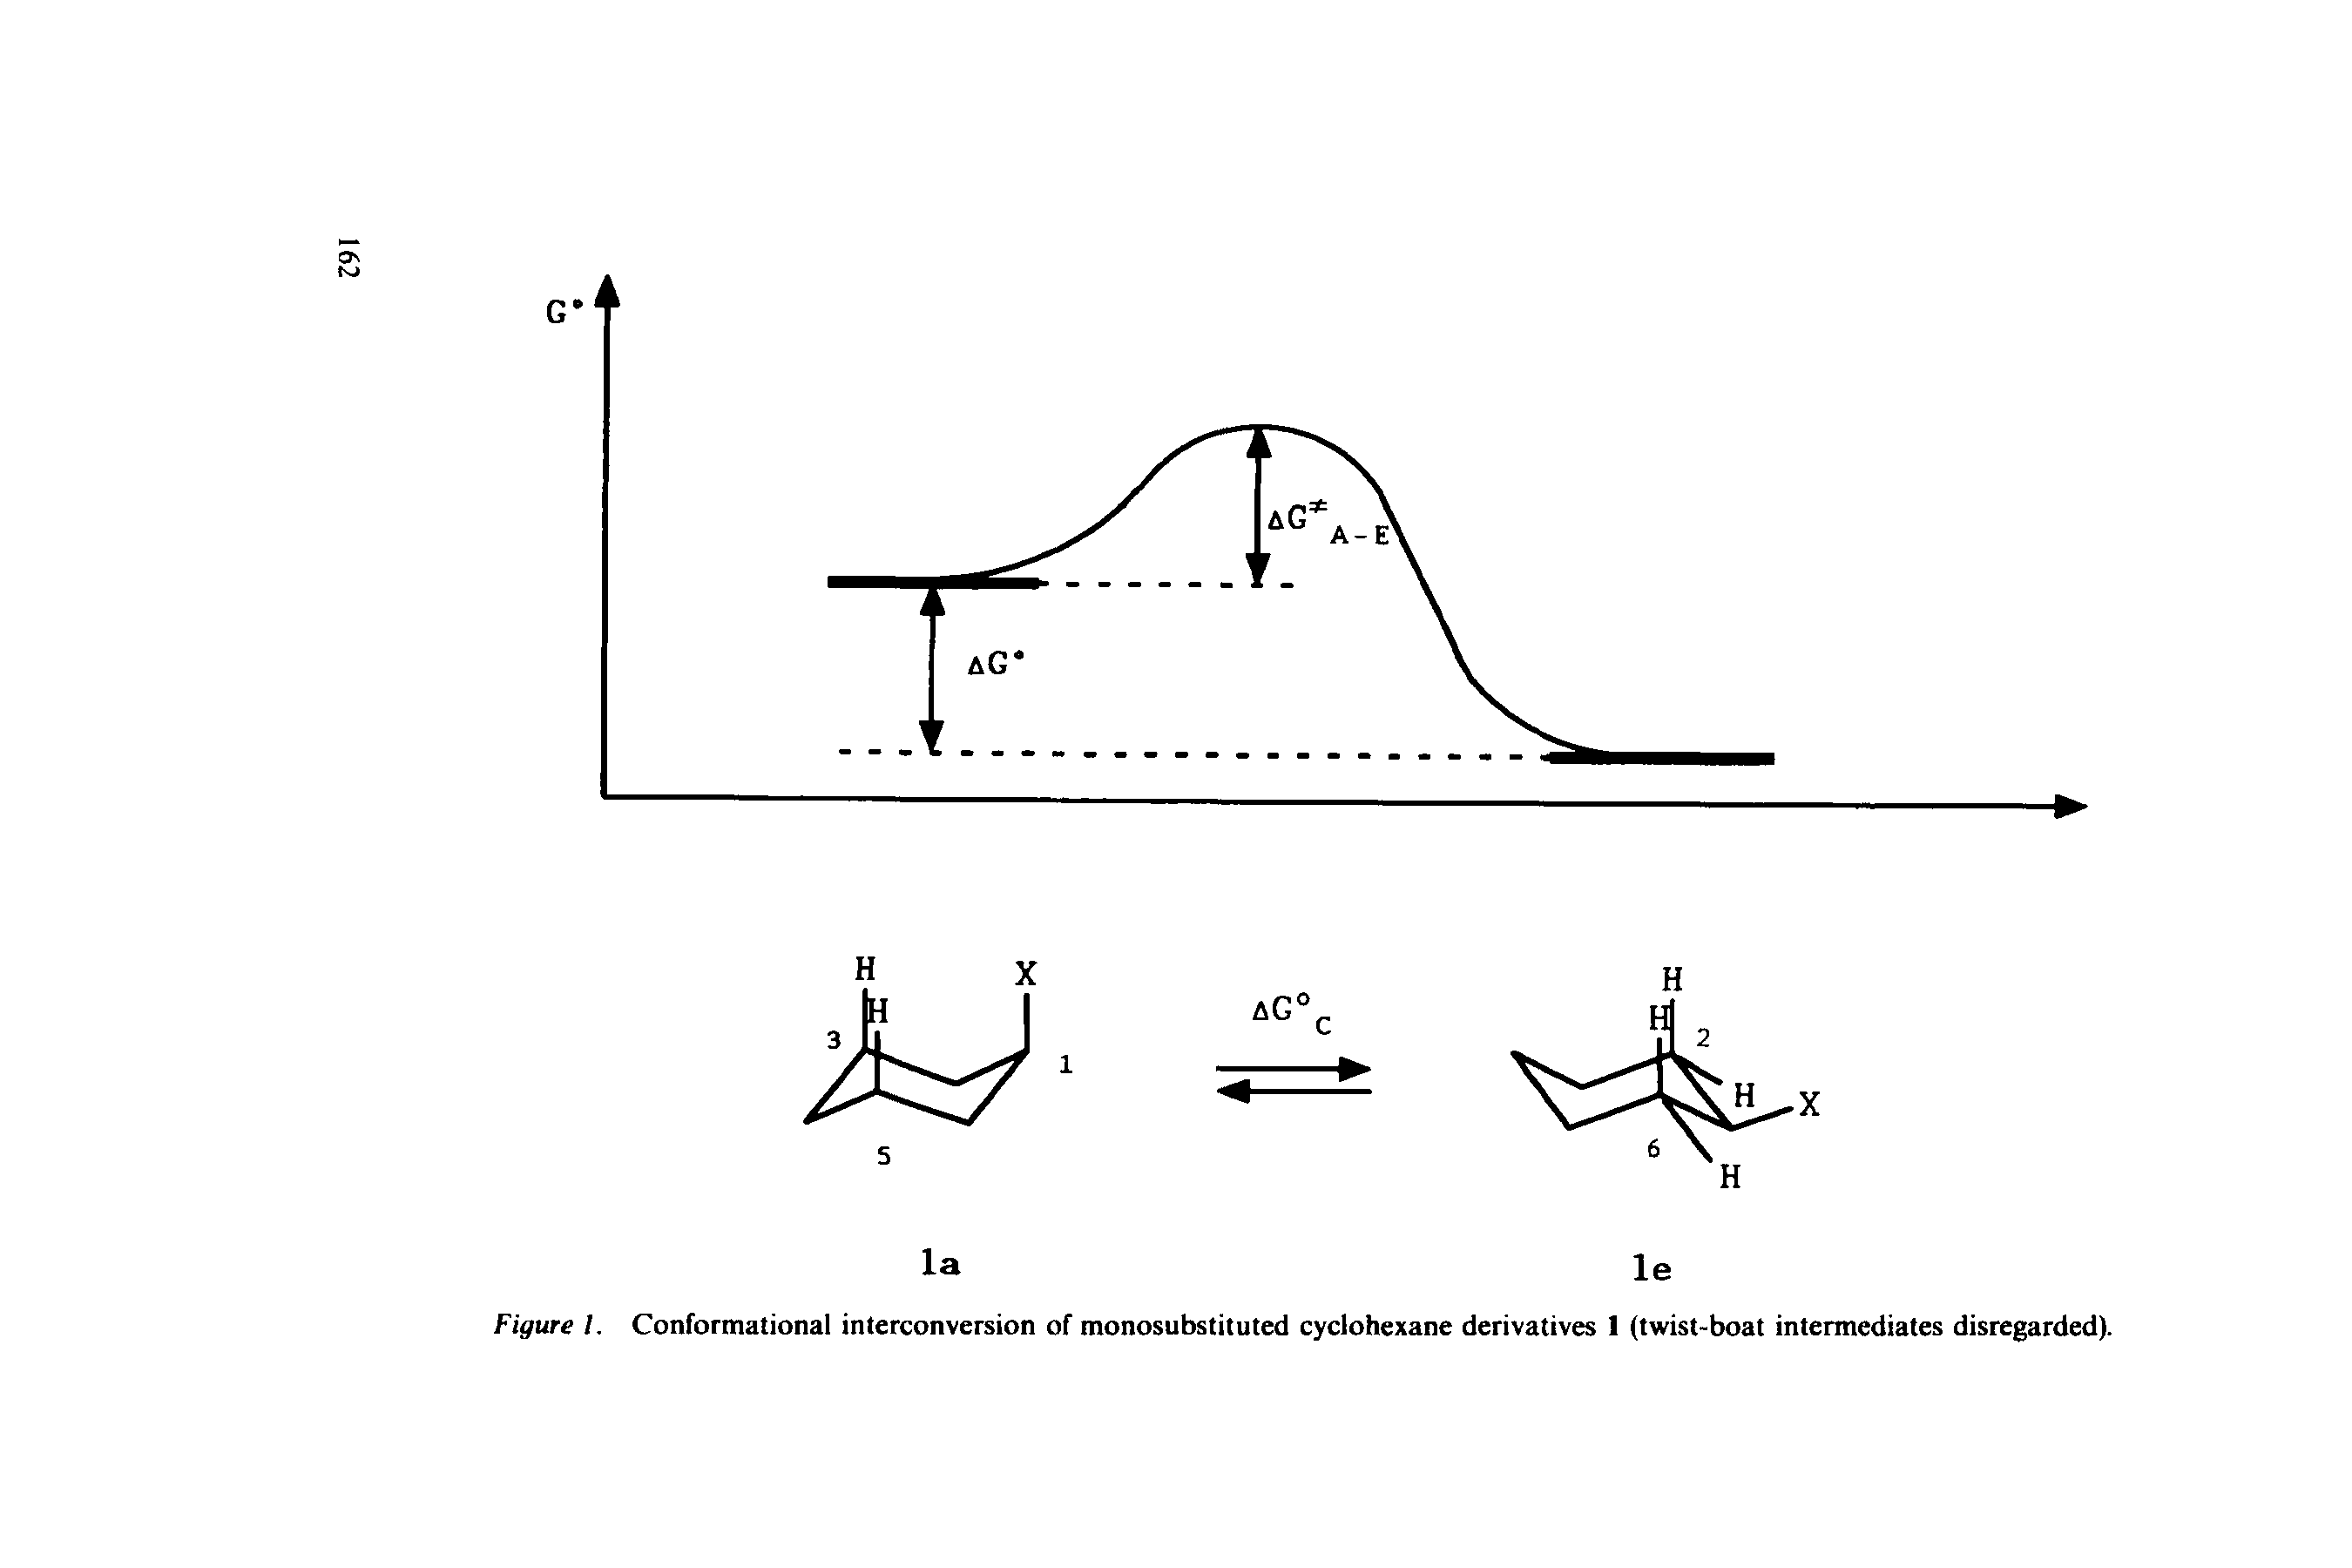 Figure I. Conformational interconversion of monosubstituted cyclohexane derivatives 1 (twist-boat intermediates disregarded).